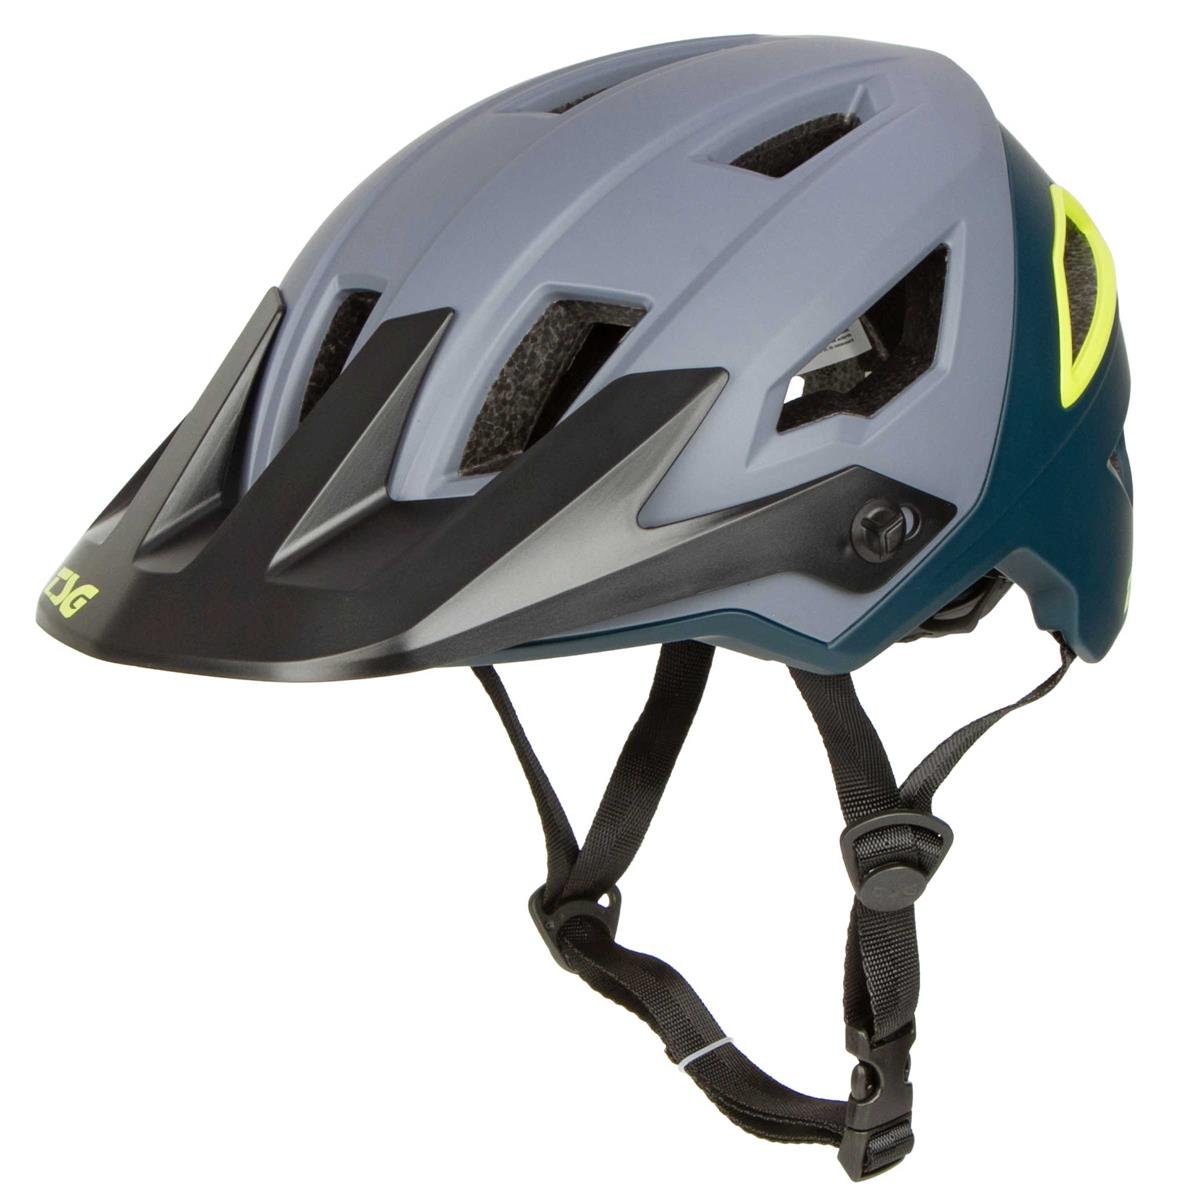 TSG Enduro MTB Helmet Chatter Graphic Design - Satin Gray/Blue